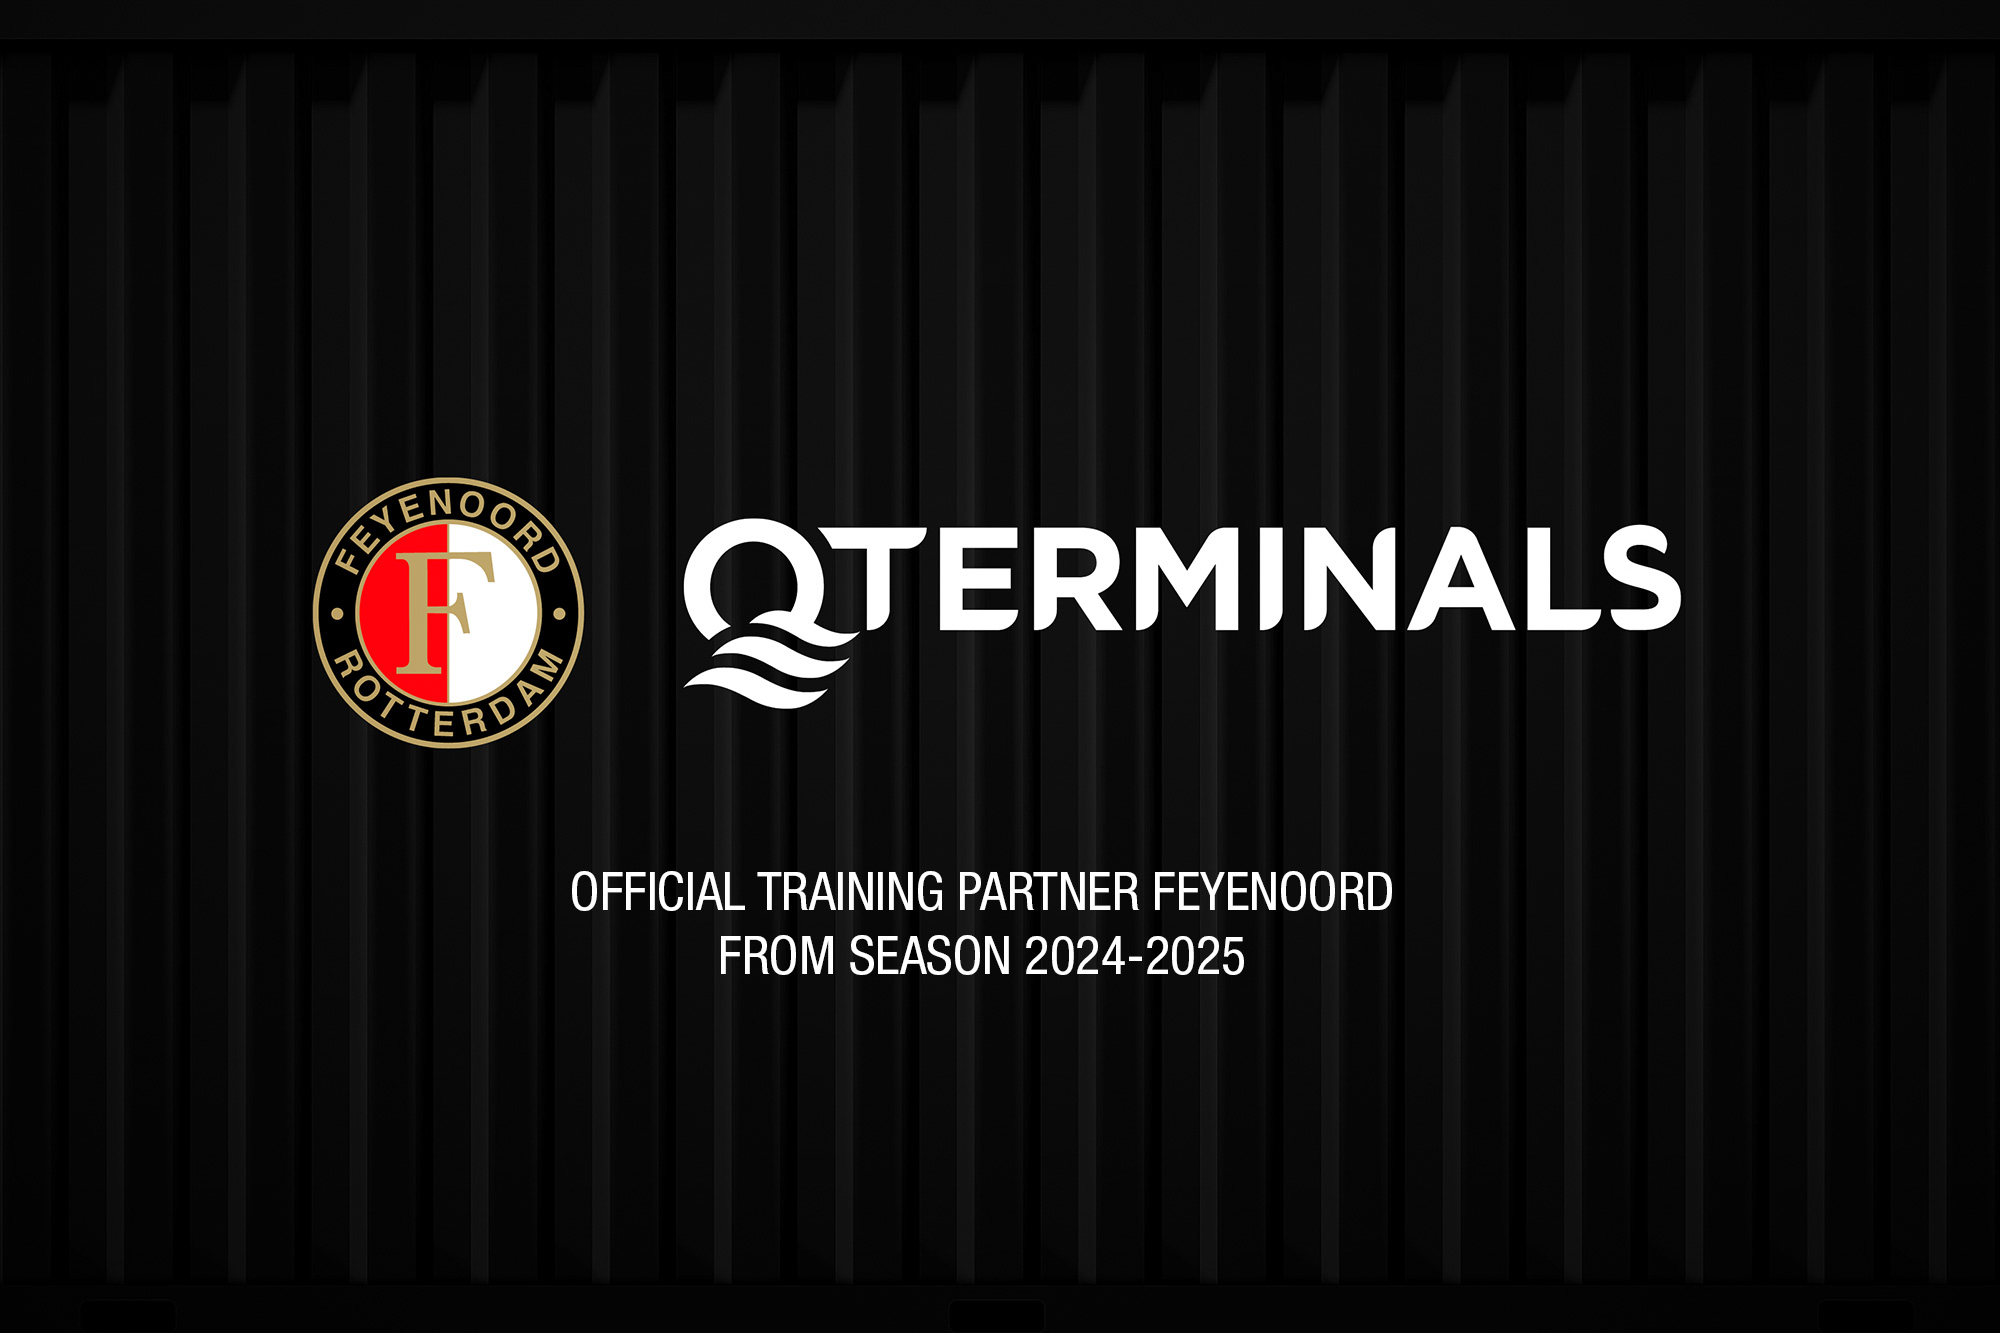 QTerminals Official Training Partner of Feyenoord Club